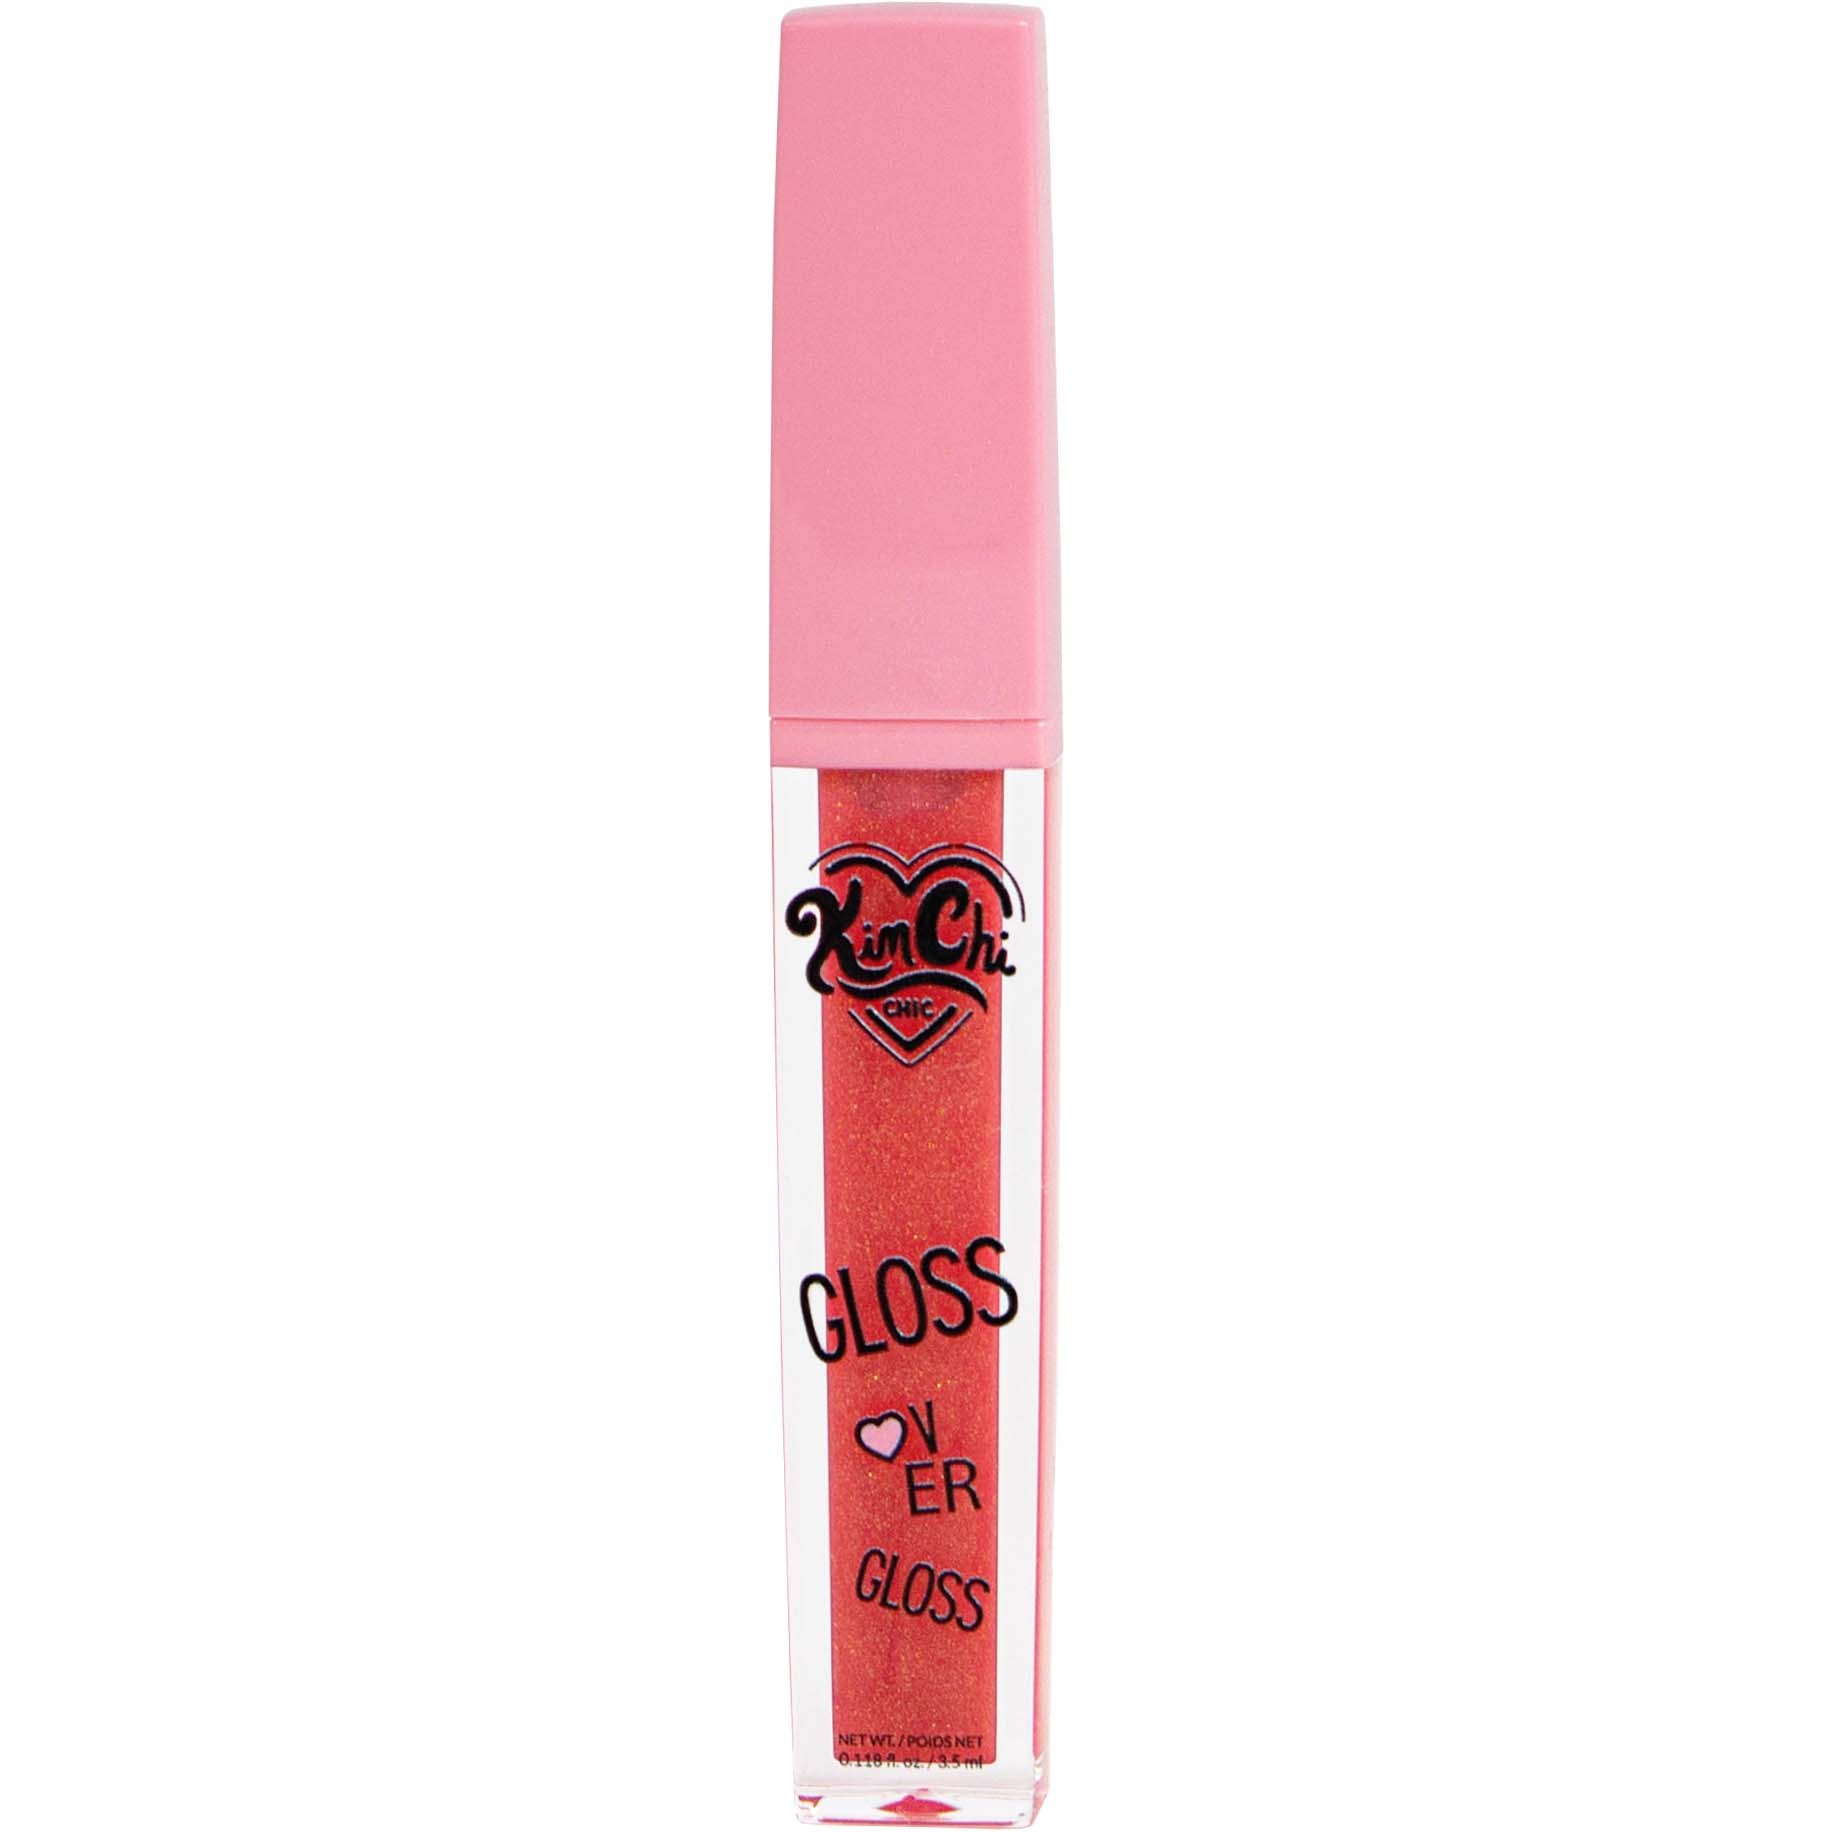 KimChi Chic Gloss Over Gloss Full Coverage Lipgloss Ripe Mango